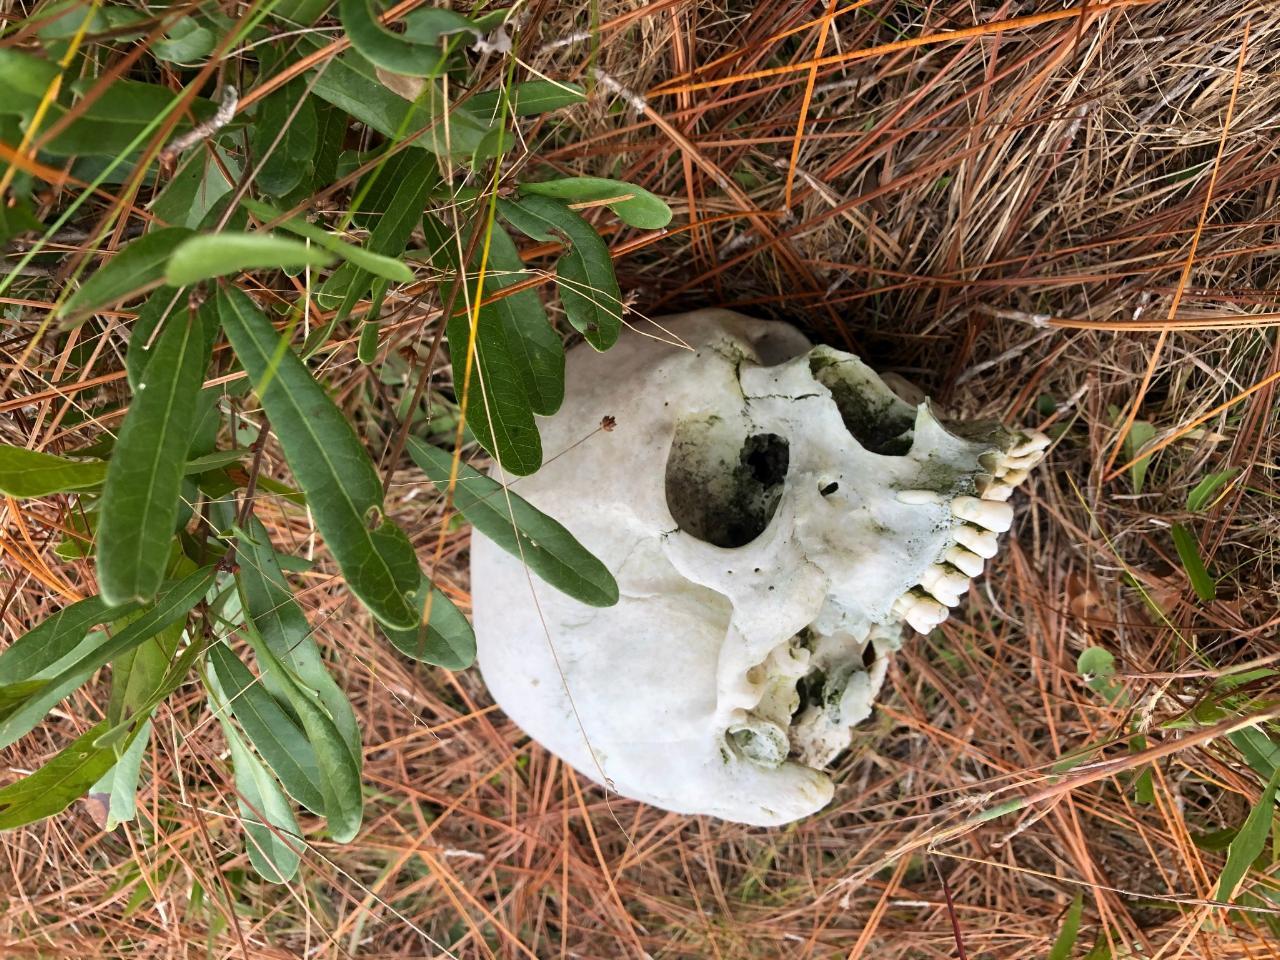 Skeletal remains found in Buen Intento